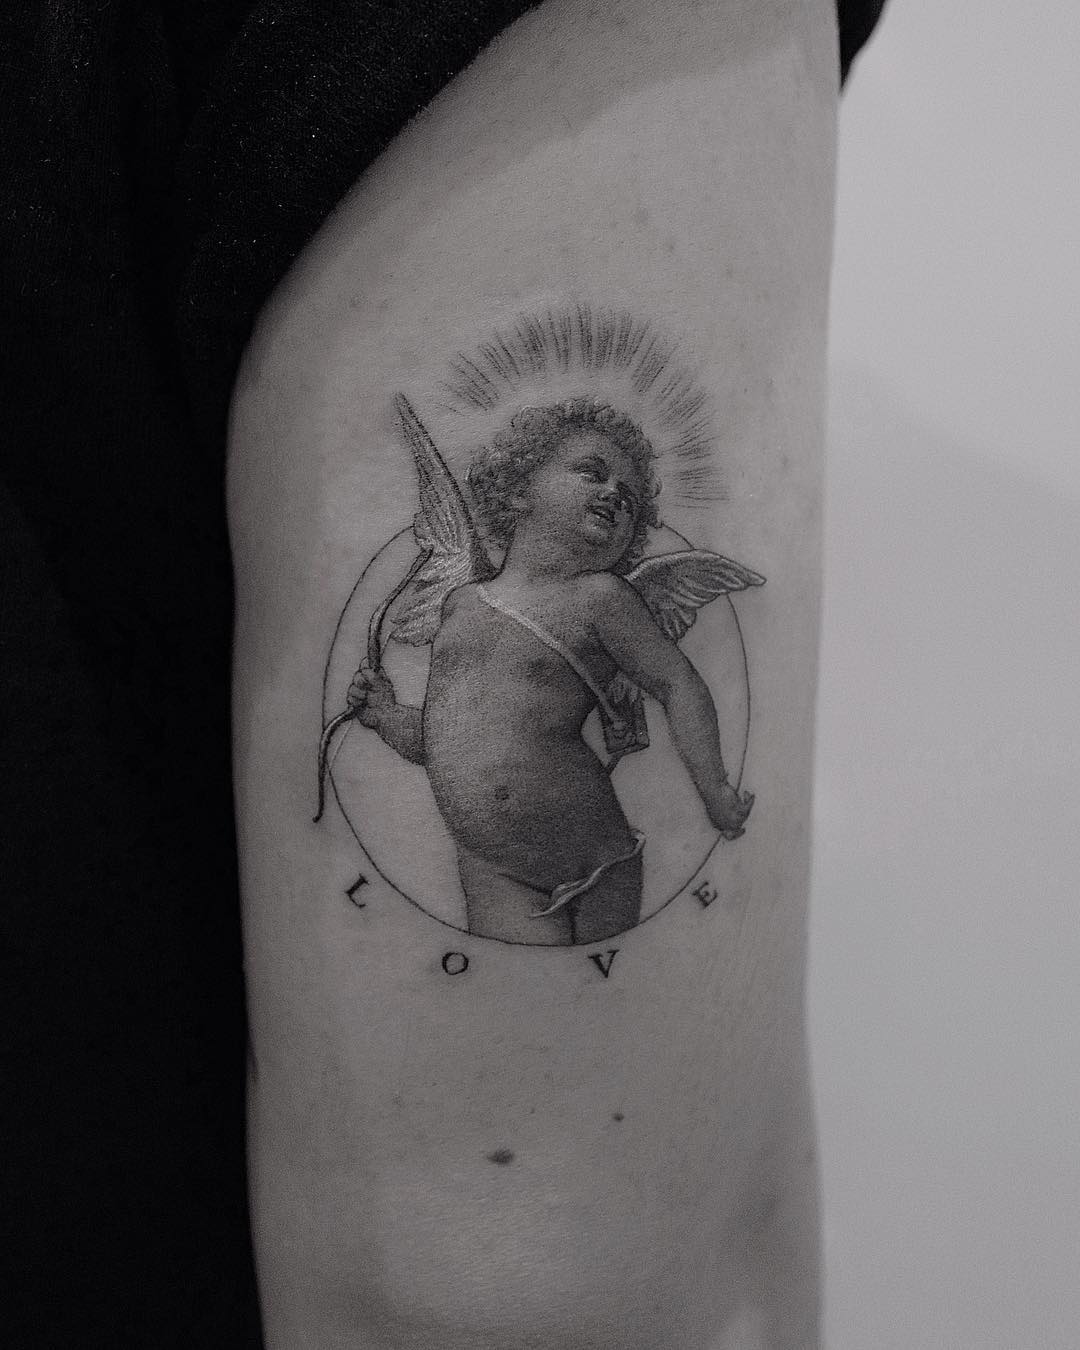 Demonic cherub tattooed by me, thanks for looking! : r/TattooDesigns